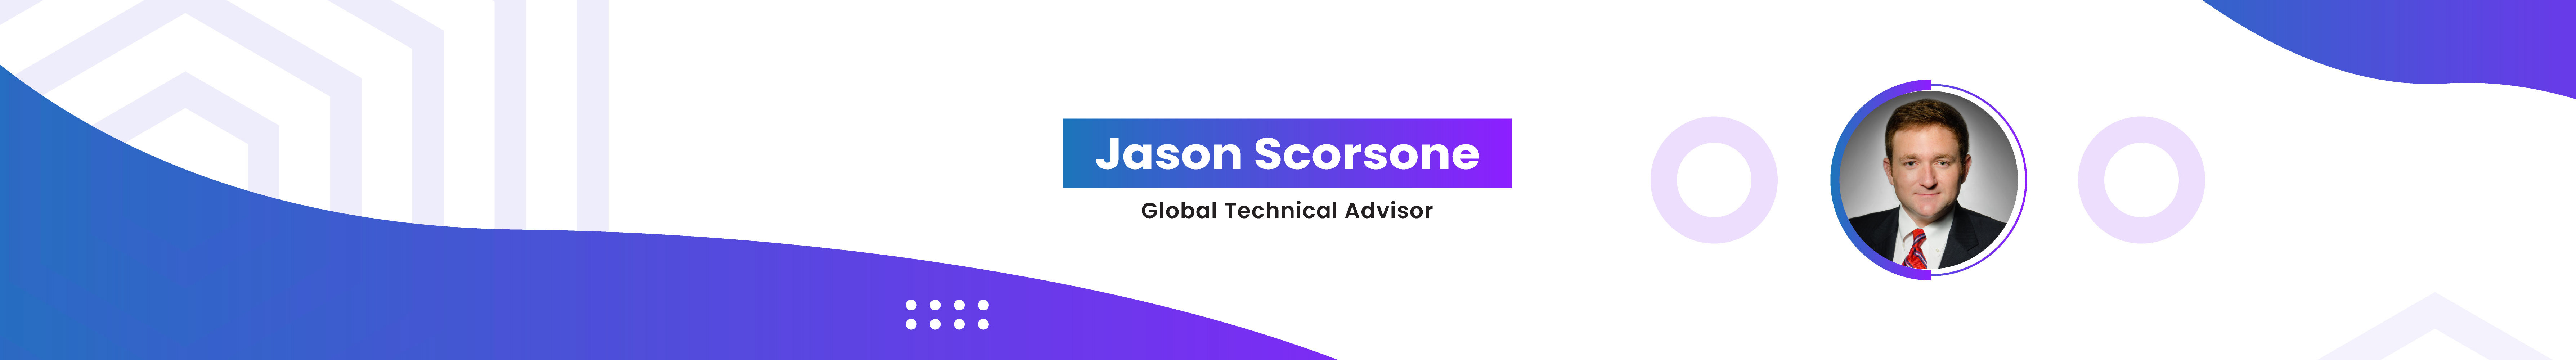 Jason Scorsone's profile banner